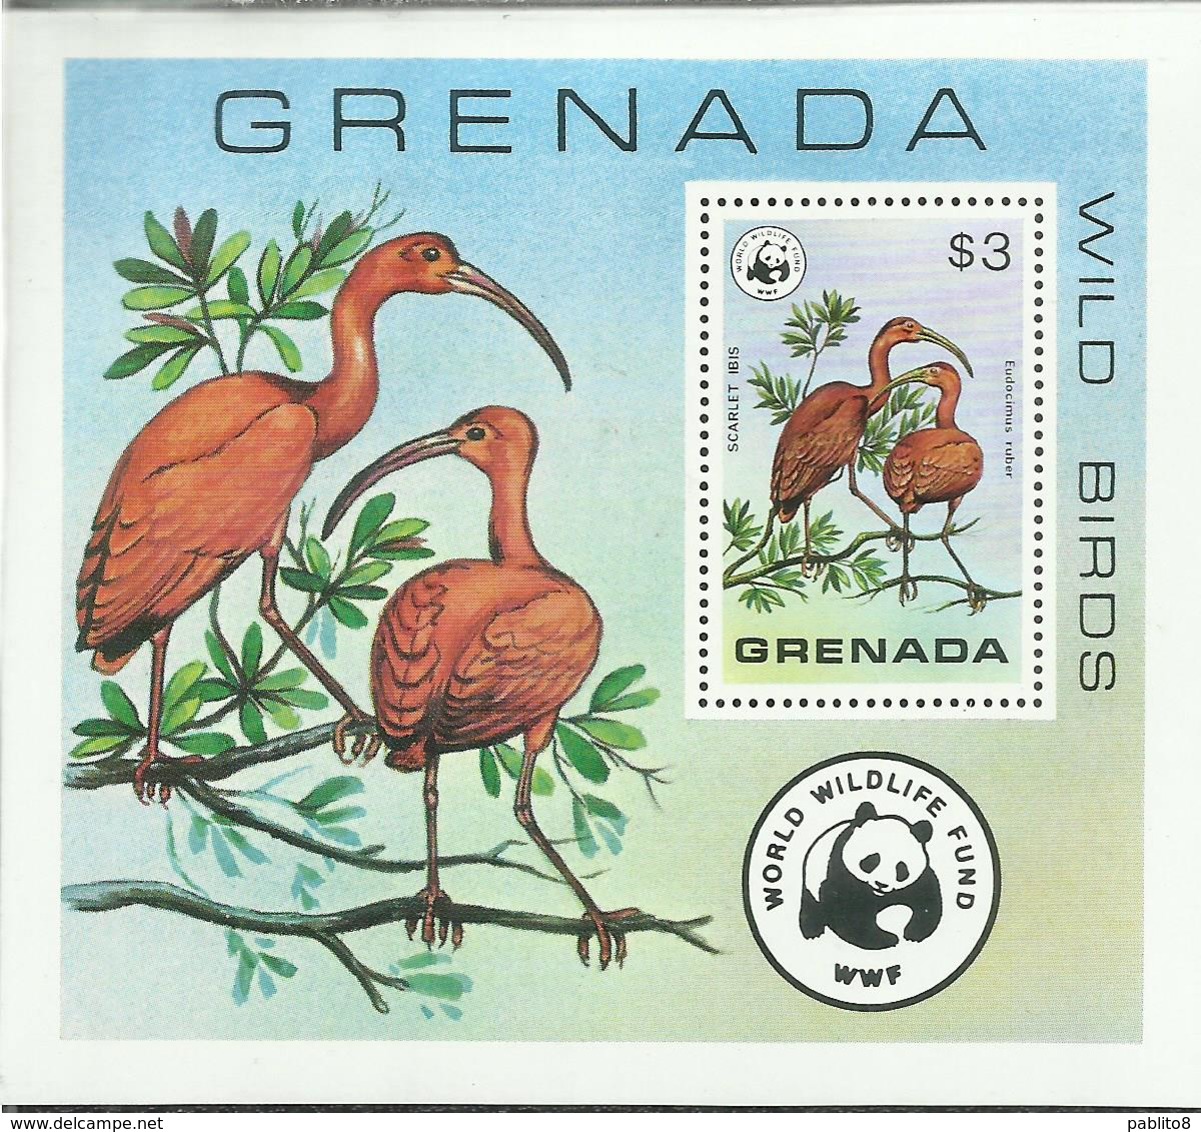 GRENADA 1978 FAUNA WWF WILD BIRDS SCARLET IBIS BLOCK SHEET BLOCCO FOGLIETTO MNH - Grenade (1974-...)